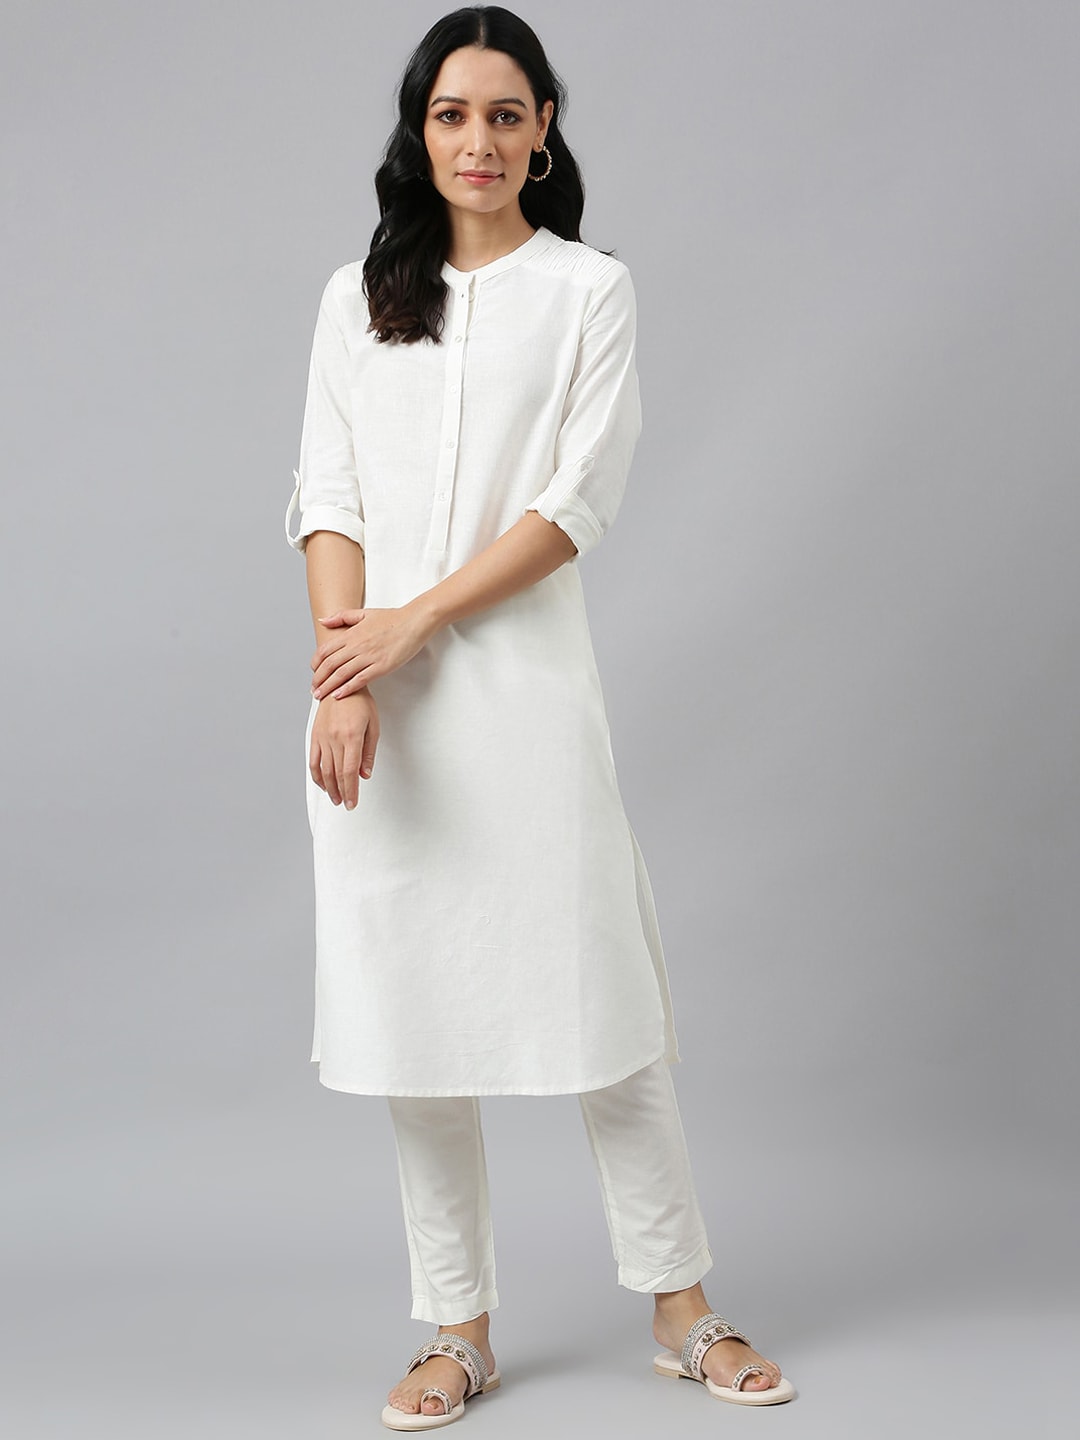 W White Mandarin Collar Roll-Up Sleeves Pathani Kurta Price in India